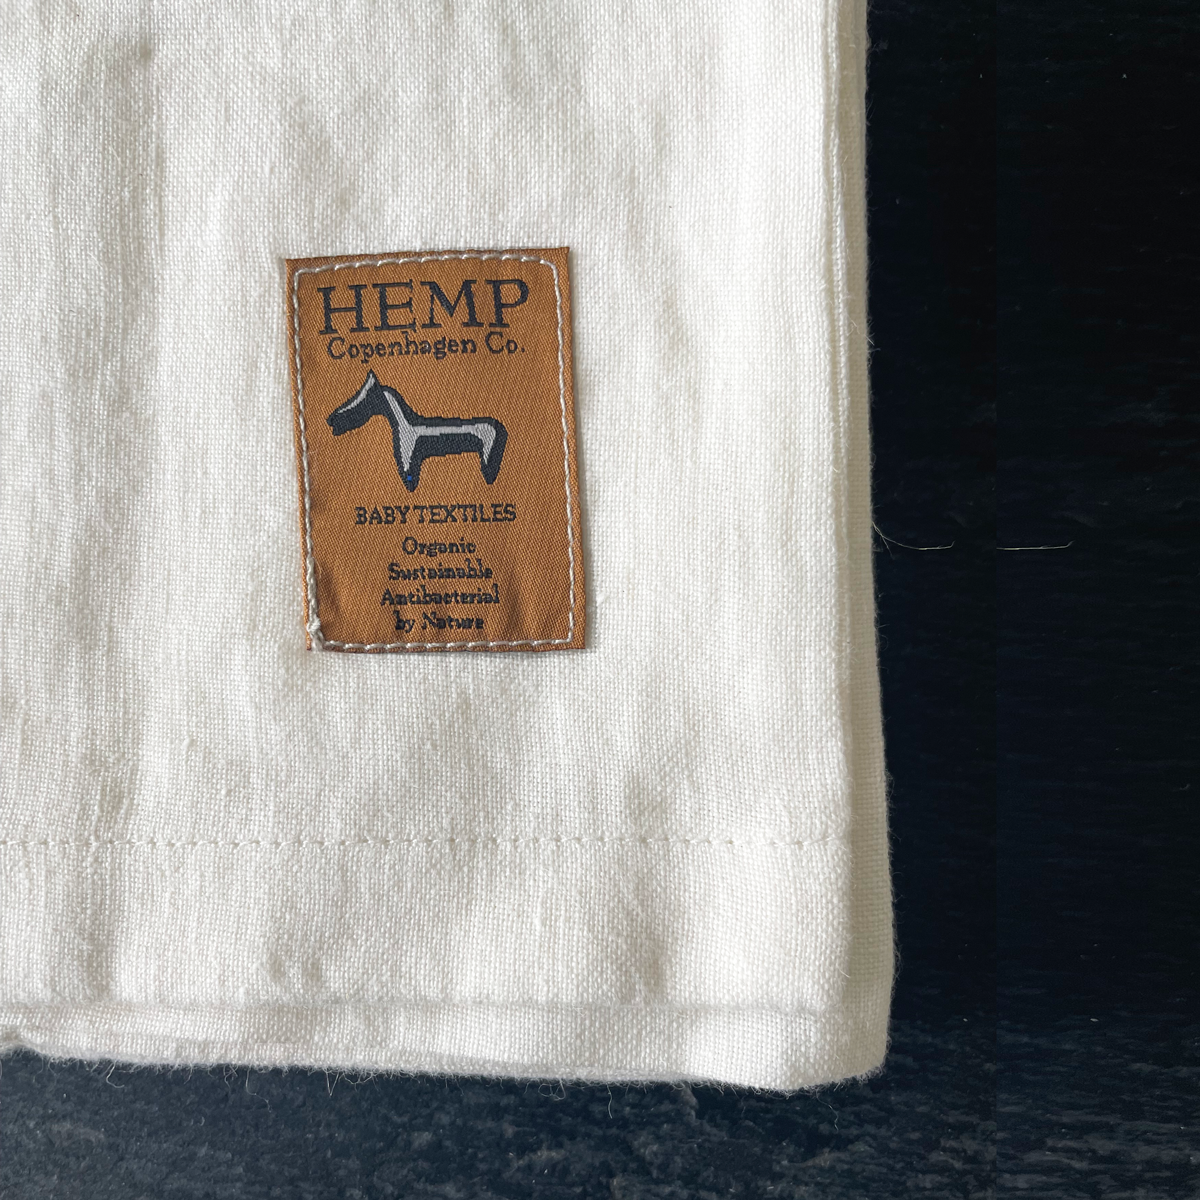 Hemp Copenhagen Co. Bed linen Toddler 100% Hemp White or Natural Grey